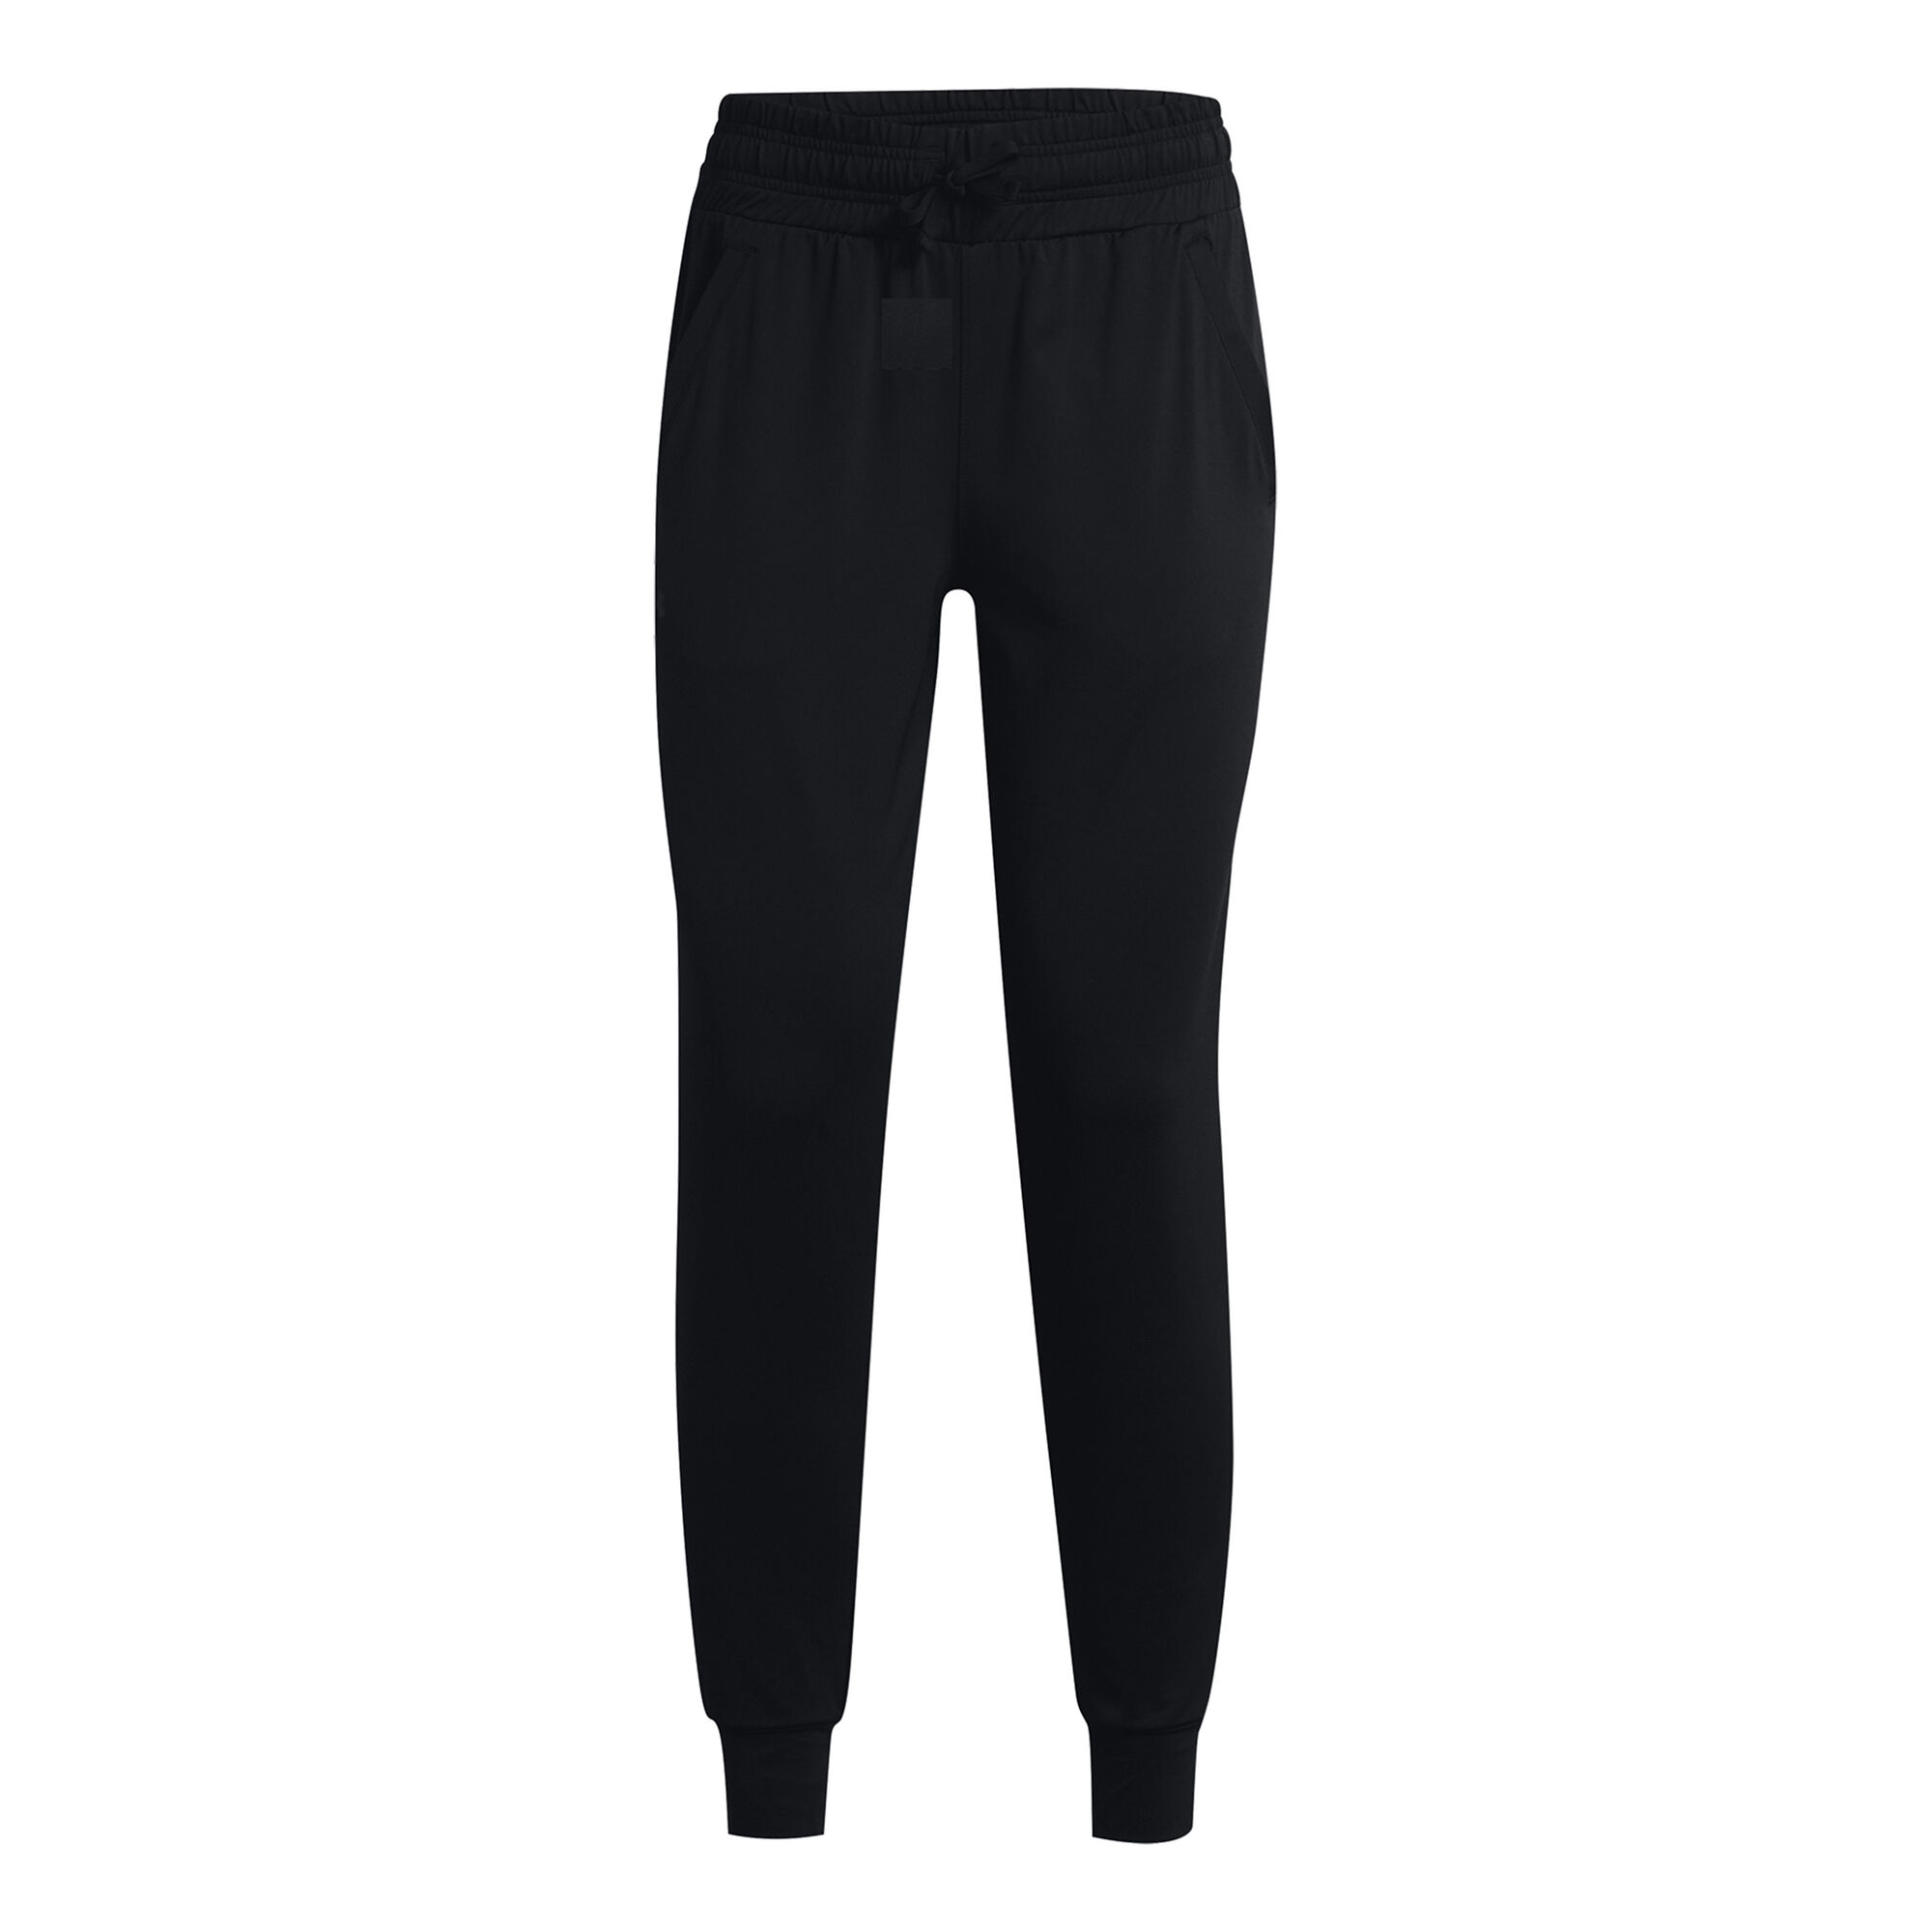 Buy Under Armour Heatgear New Fabric Training Pants Women Black online